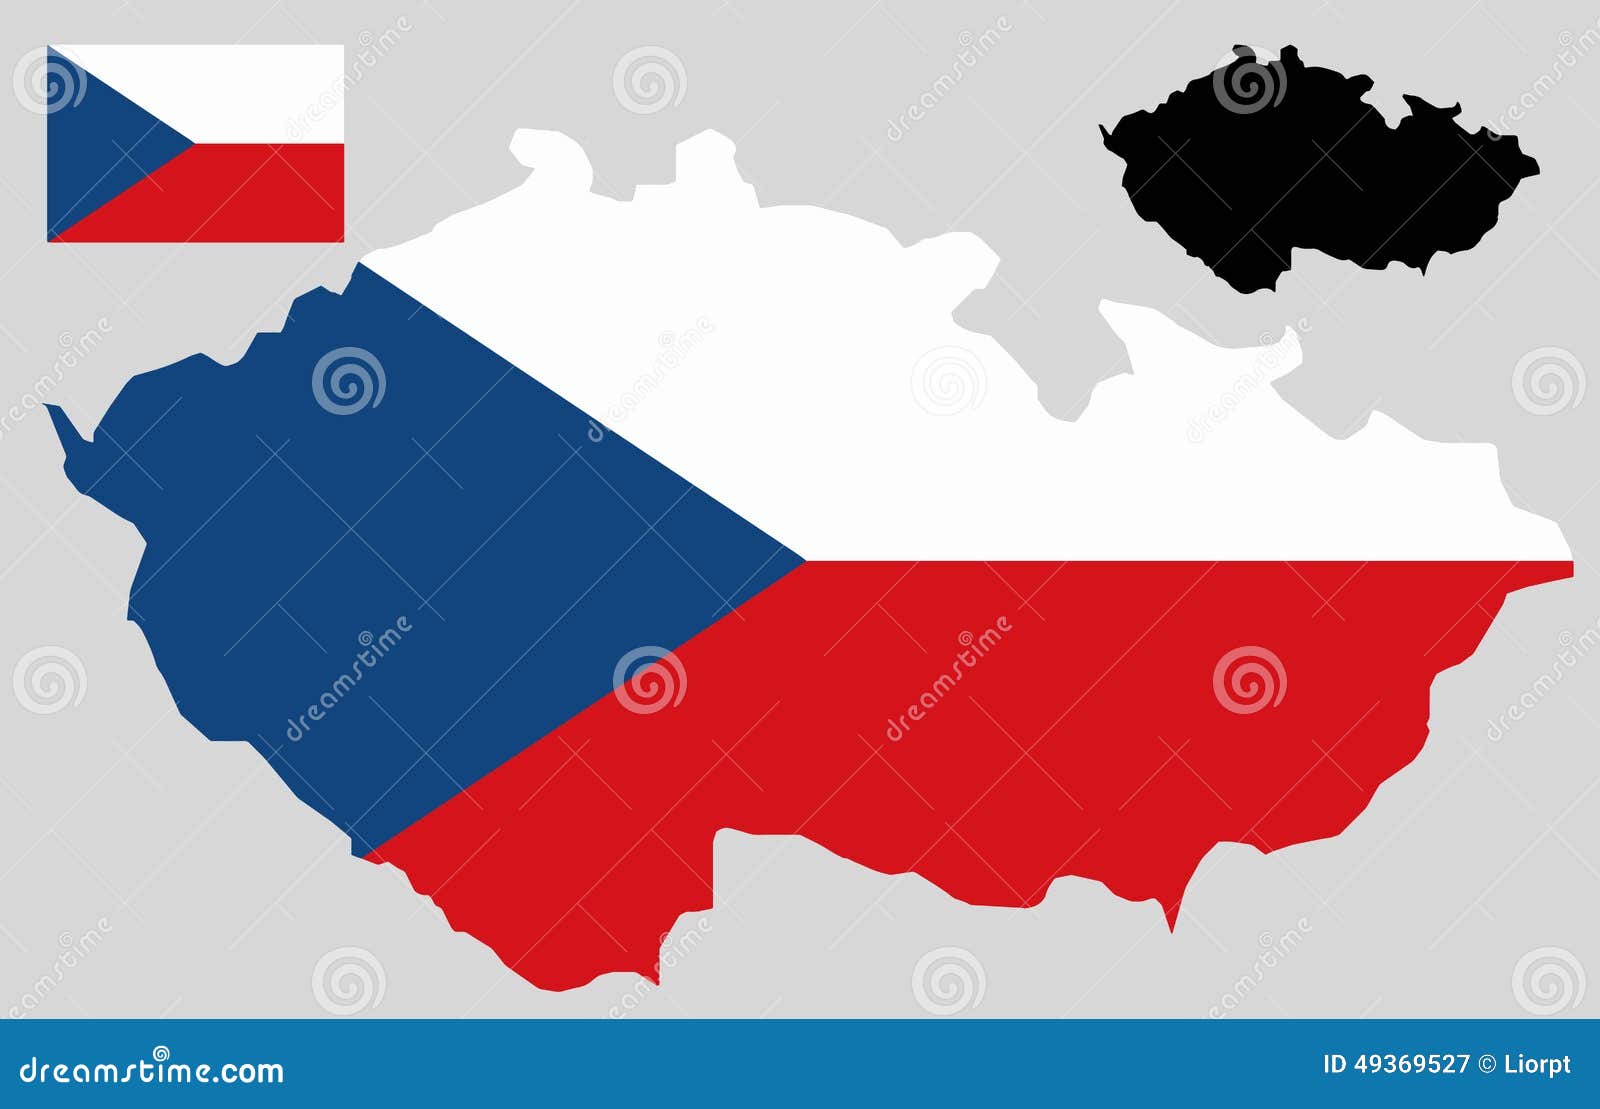 Czech Republic Map And Flag Vector Stock Vector ...